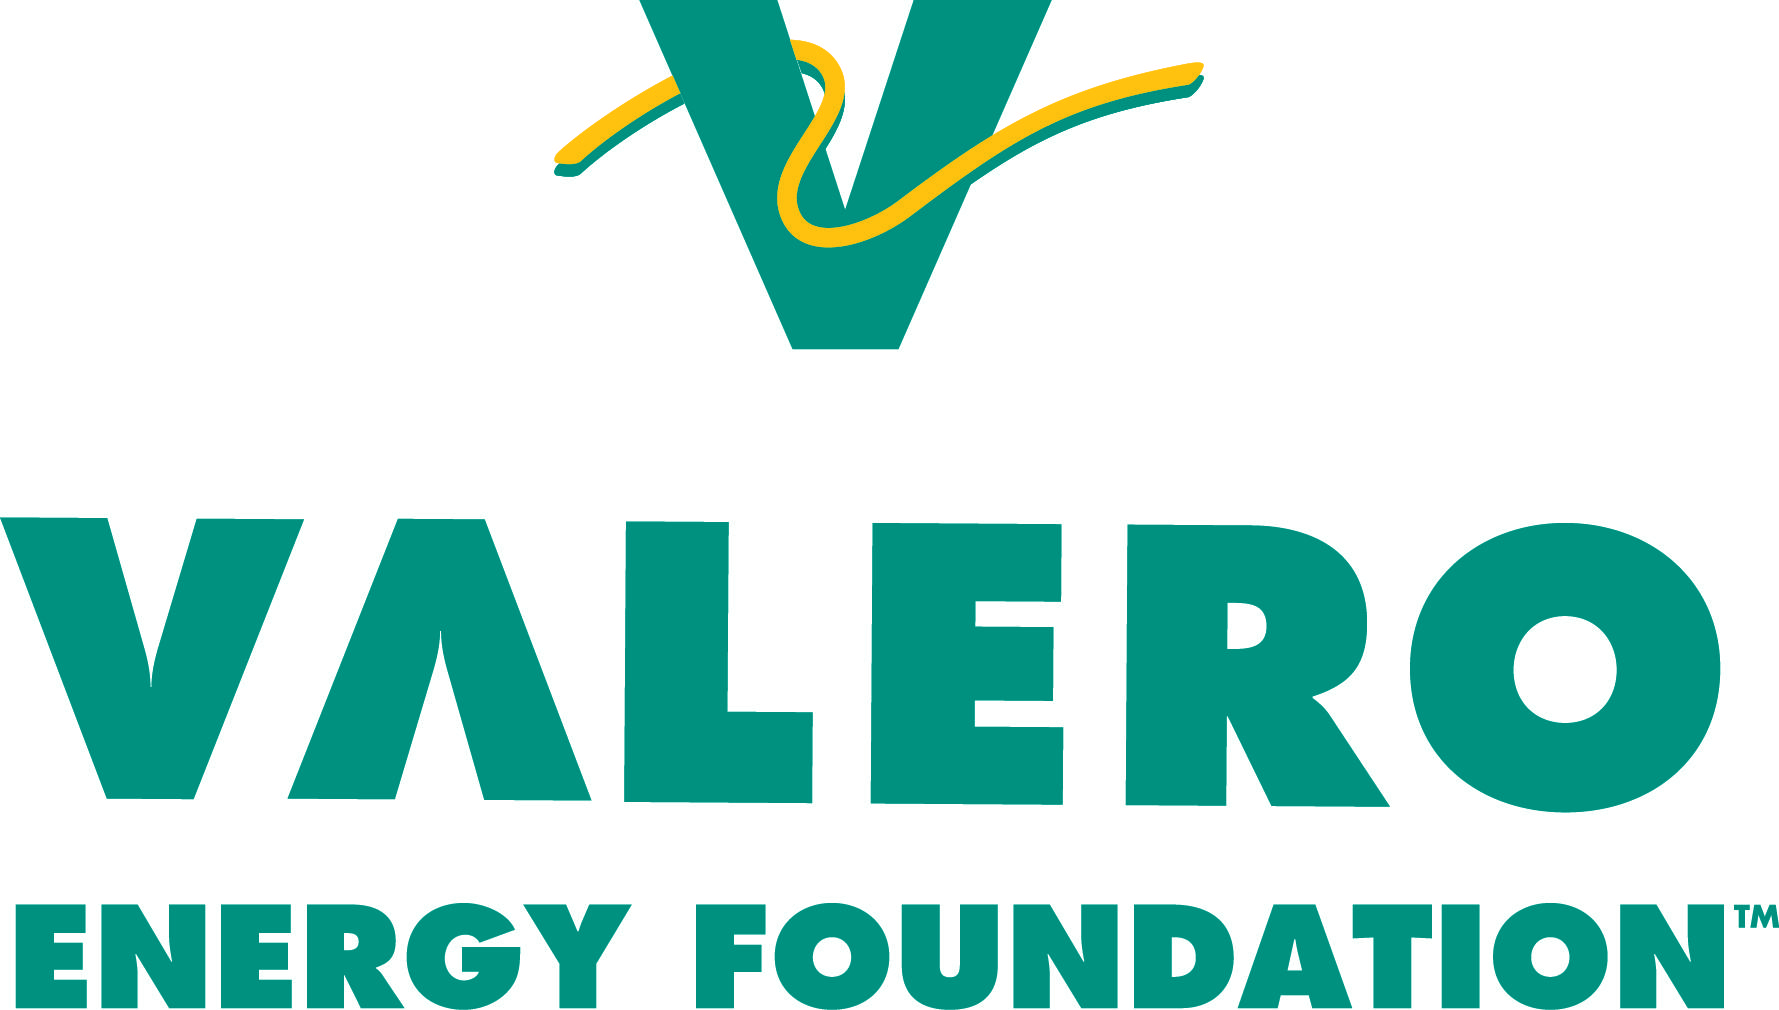 Valero Logo - Valero logo 2016 In Schools